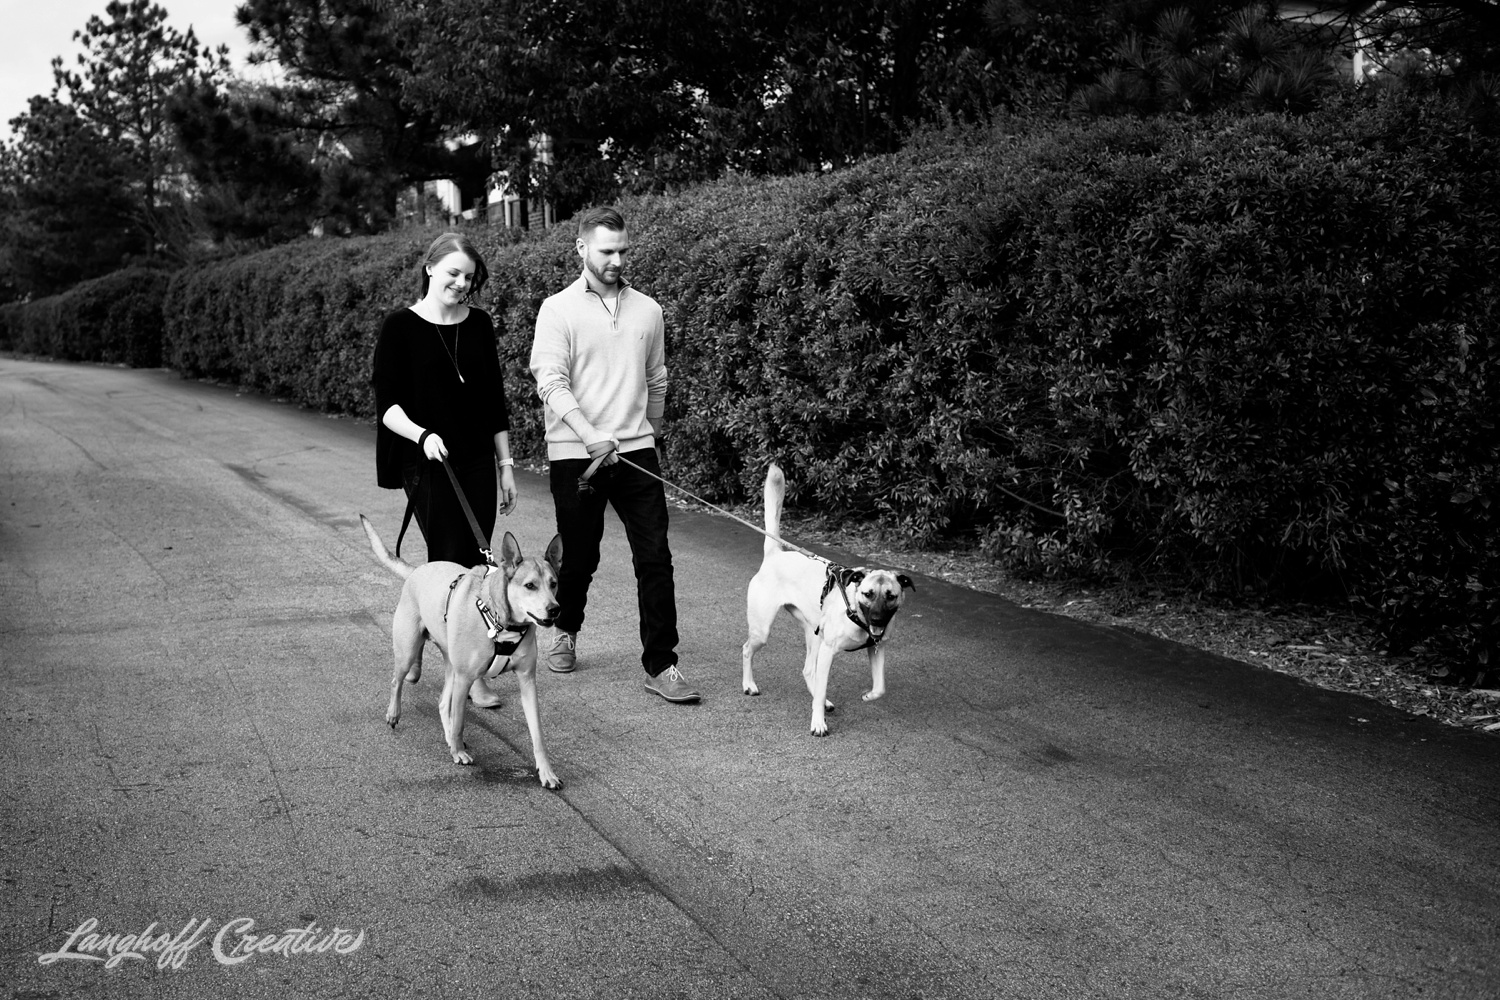 20171118-ByrdChristmas-Dogs-Holidays-LanghoffCreative-RealLifeSession-DocumentaryFamilyPhotography-RDUphotographer-8-photo.jpg